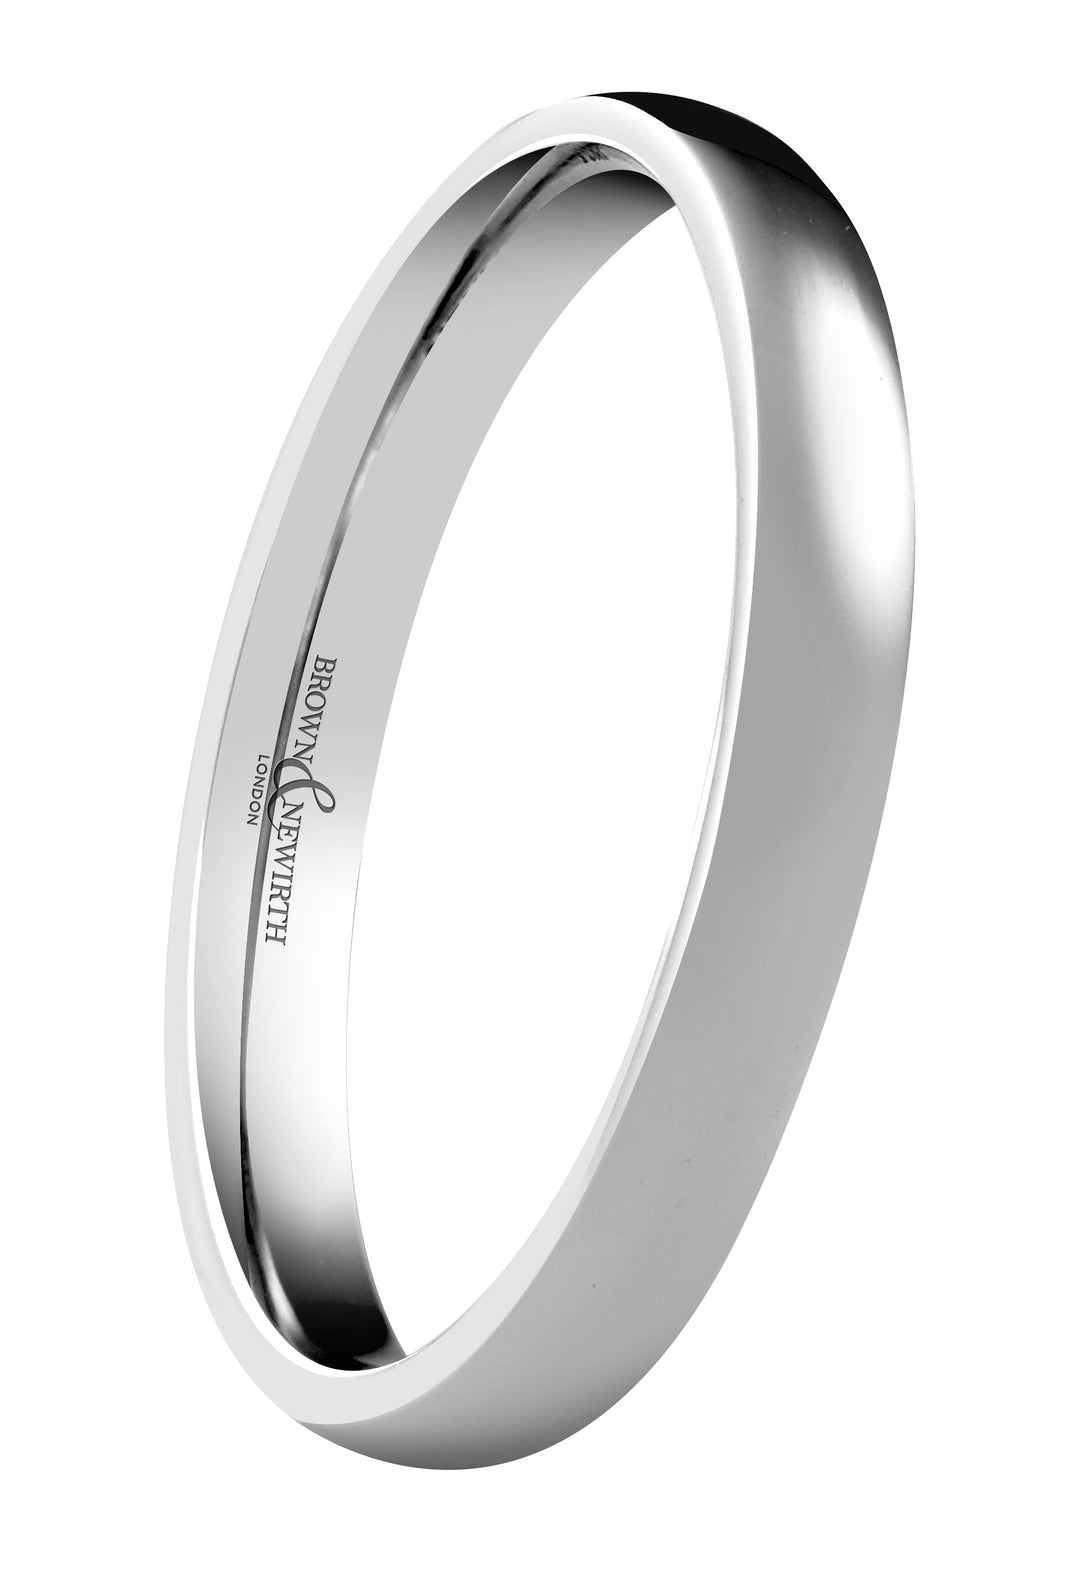 B&N Simplicity Wedding Ring 2.5mm